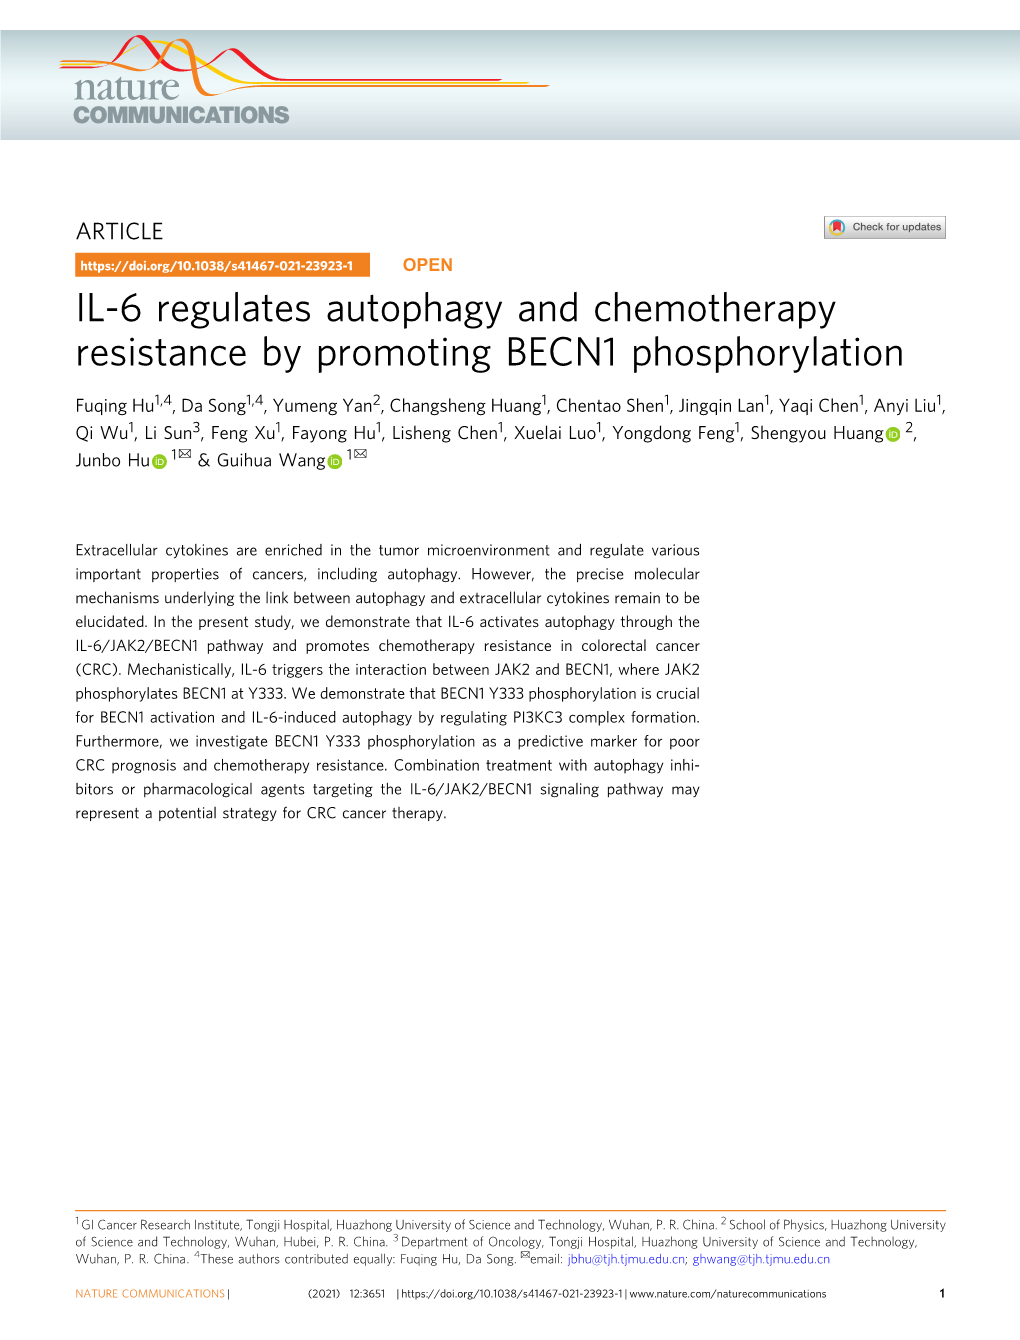 IL-6 Regulates Autophagy and Chemotherapy Resistance by Promoting BECN1 Phosphorylation